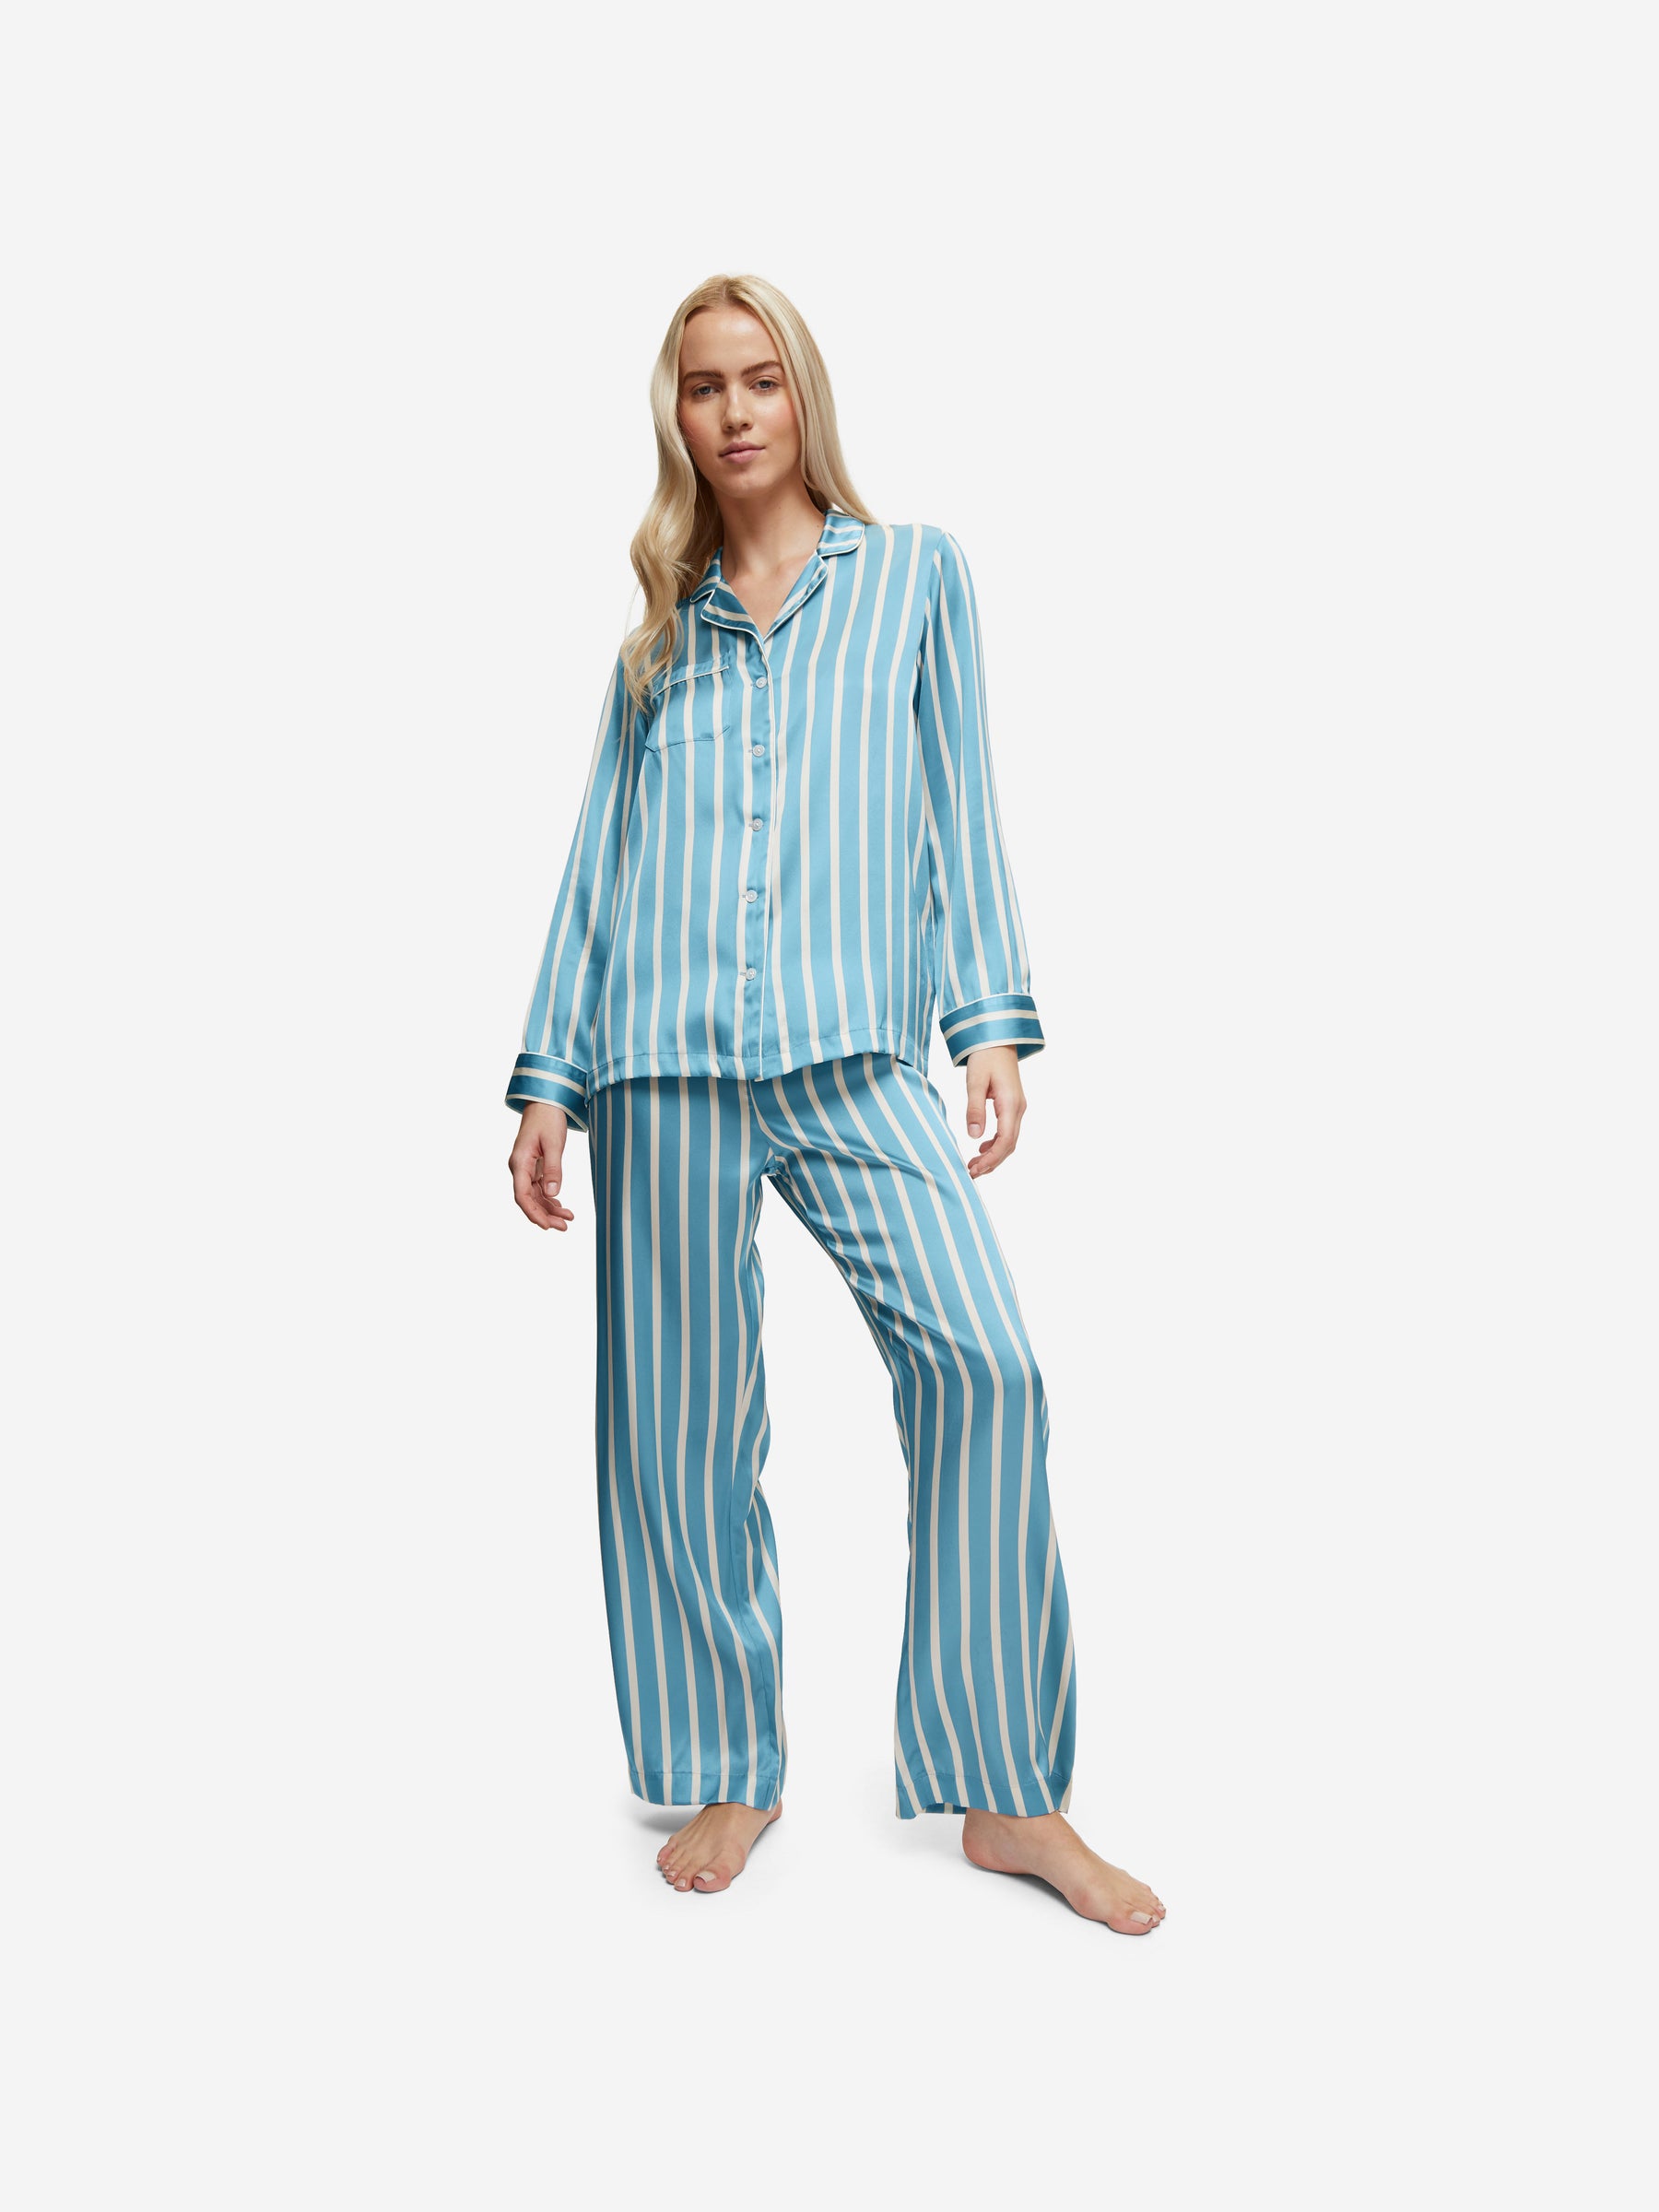 Women's Pyjamas Brindisi 88 Silk Satin Blue